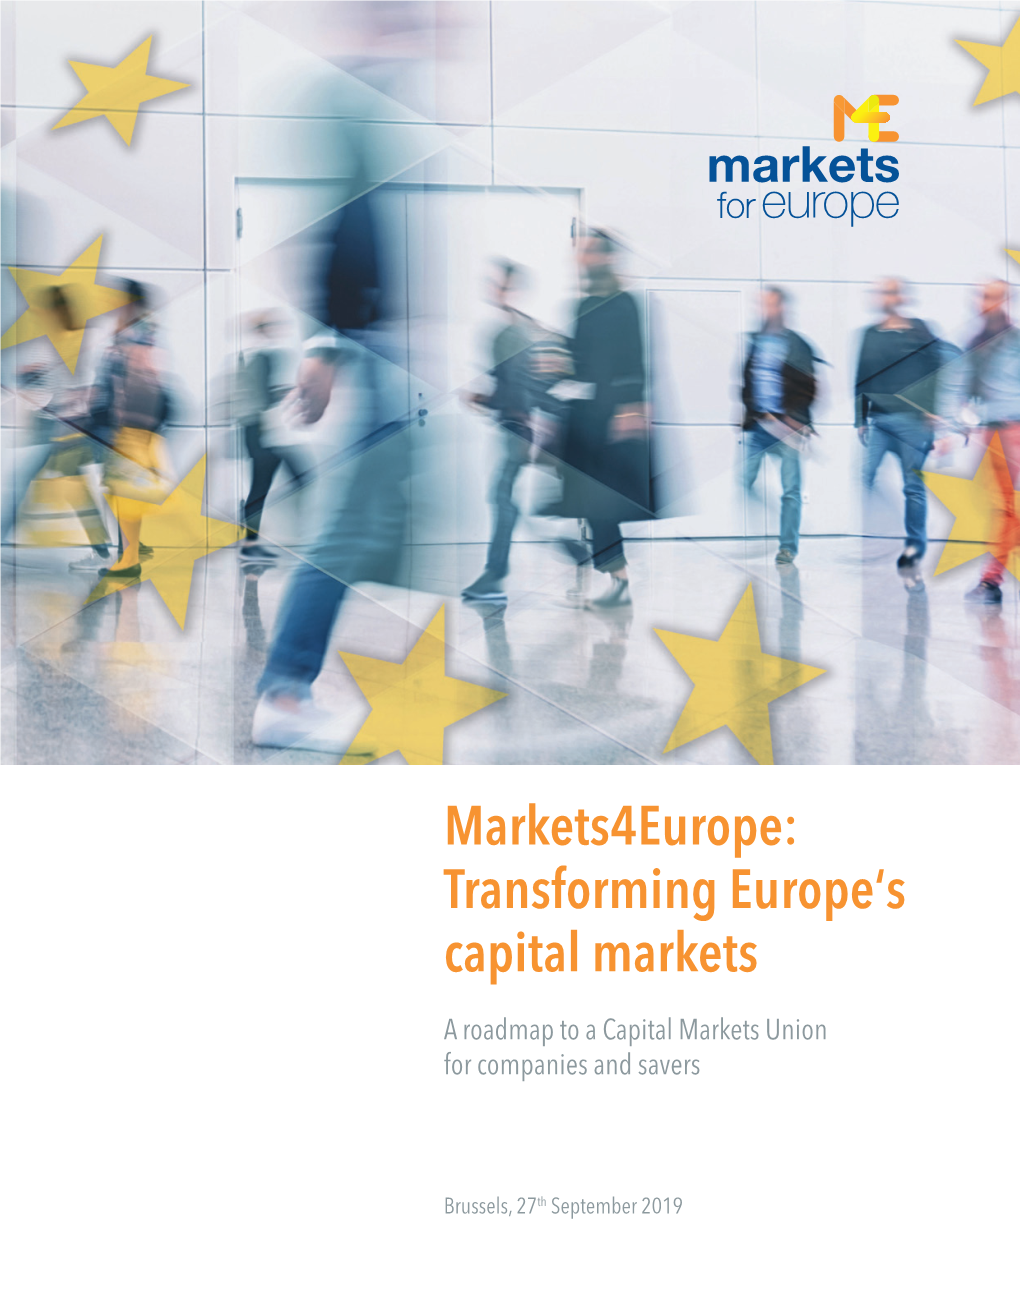 Transforming Europe's Capital Markets